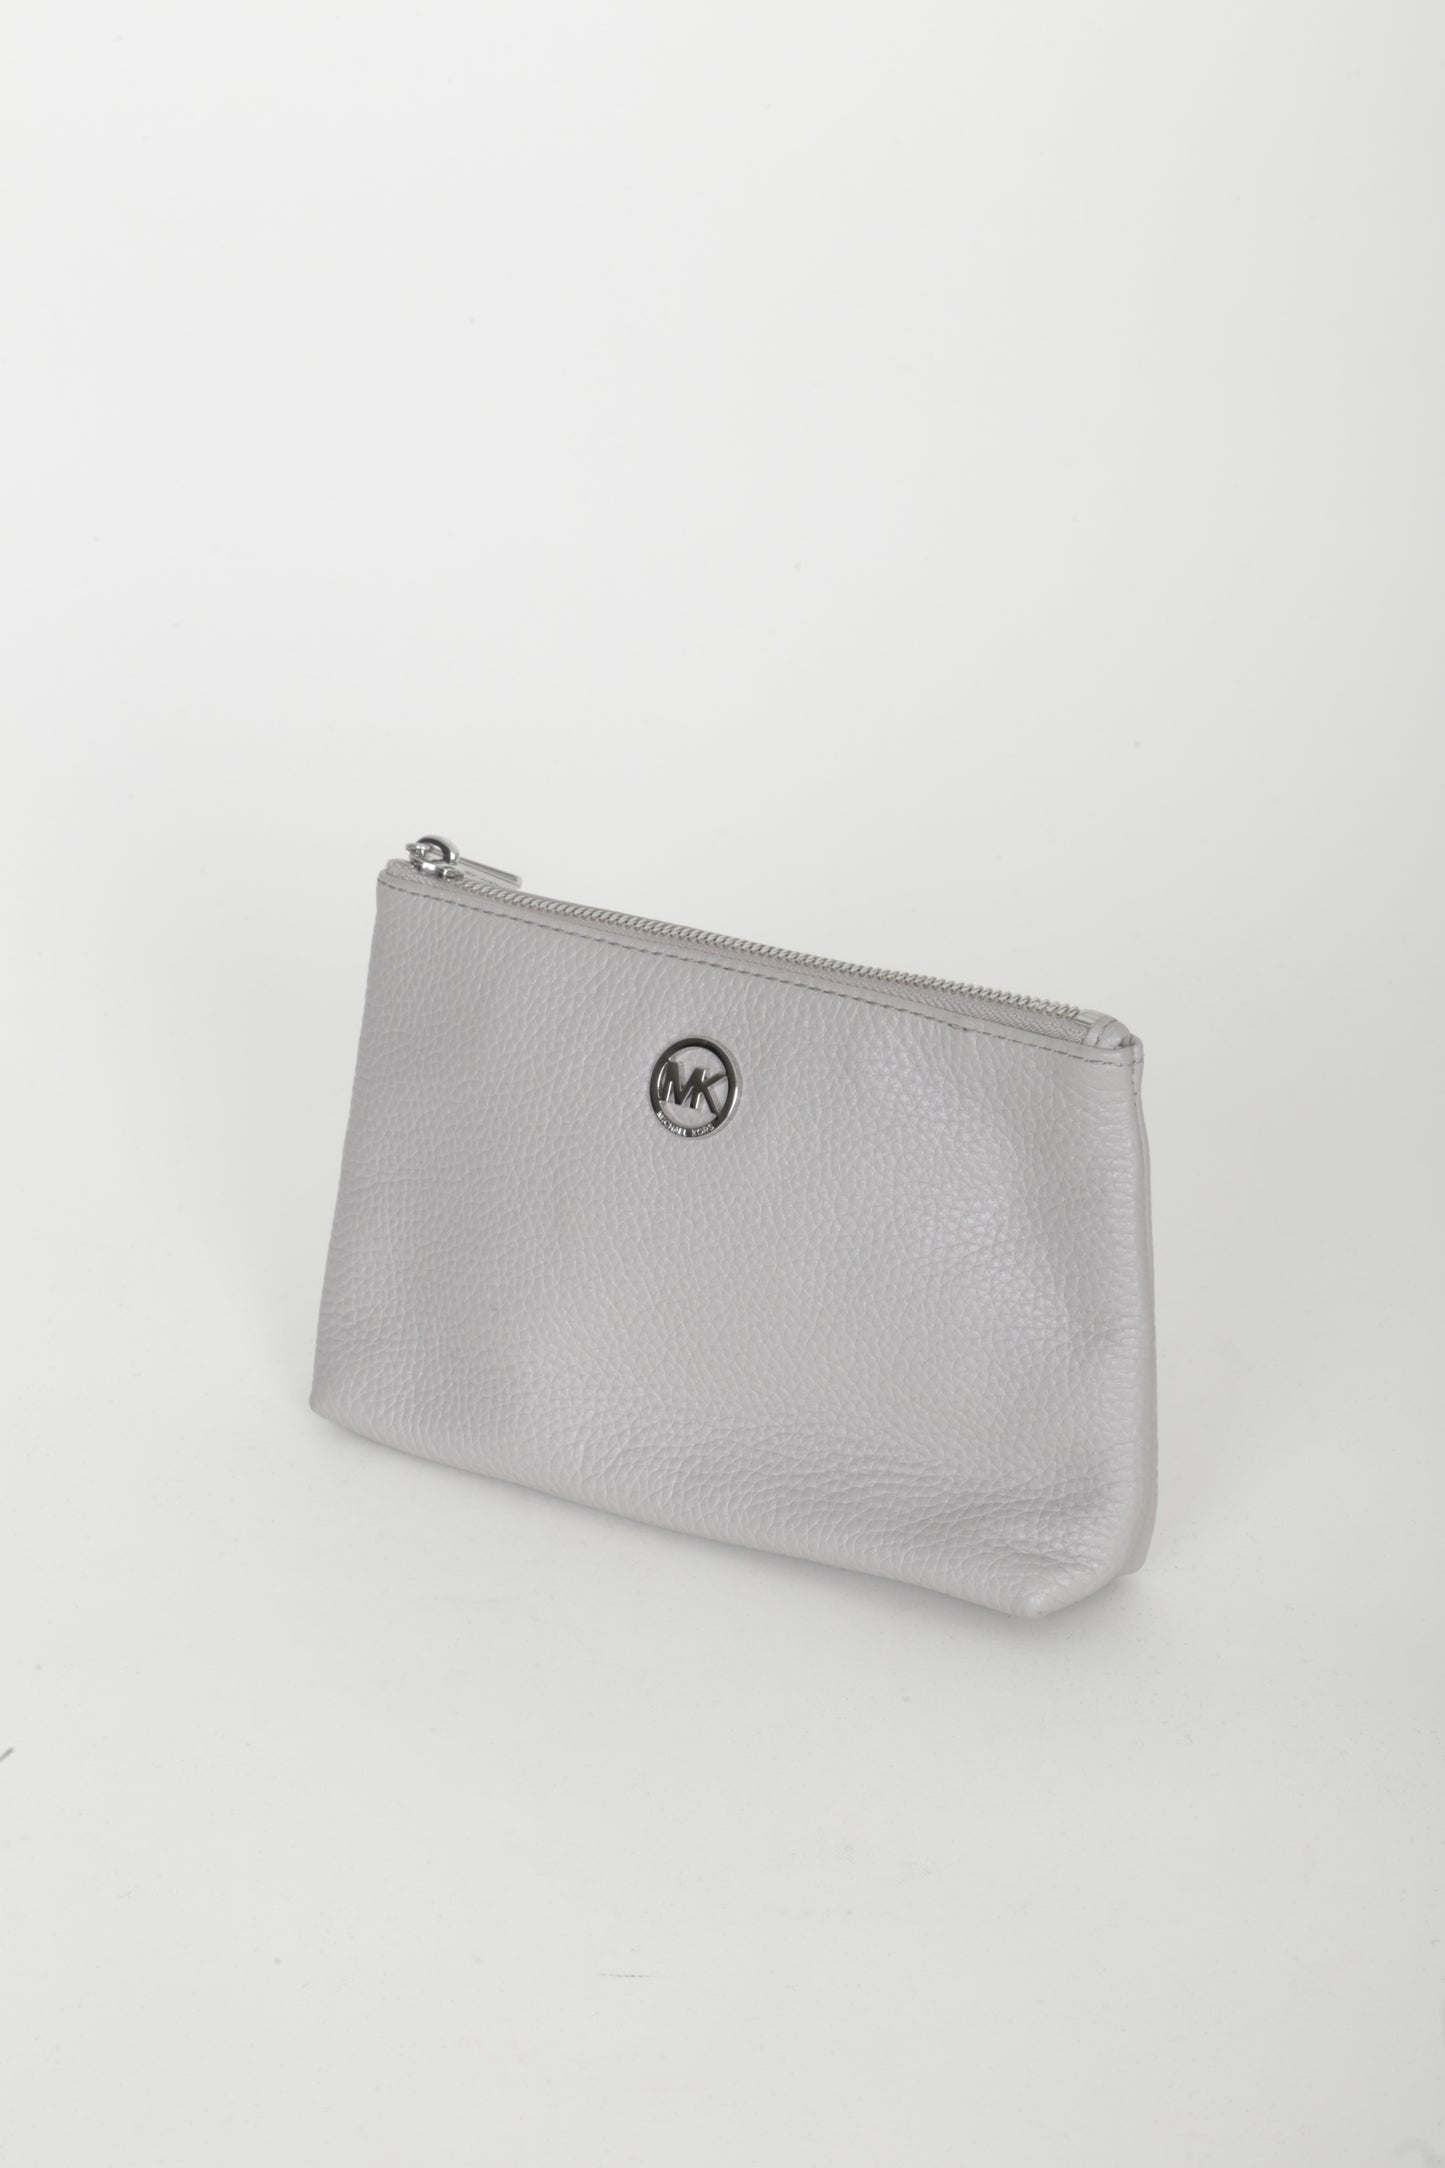 Michael Kors Womens Grey Wallet Size O/S